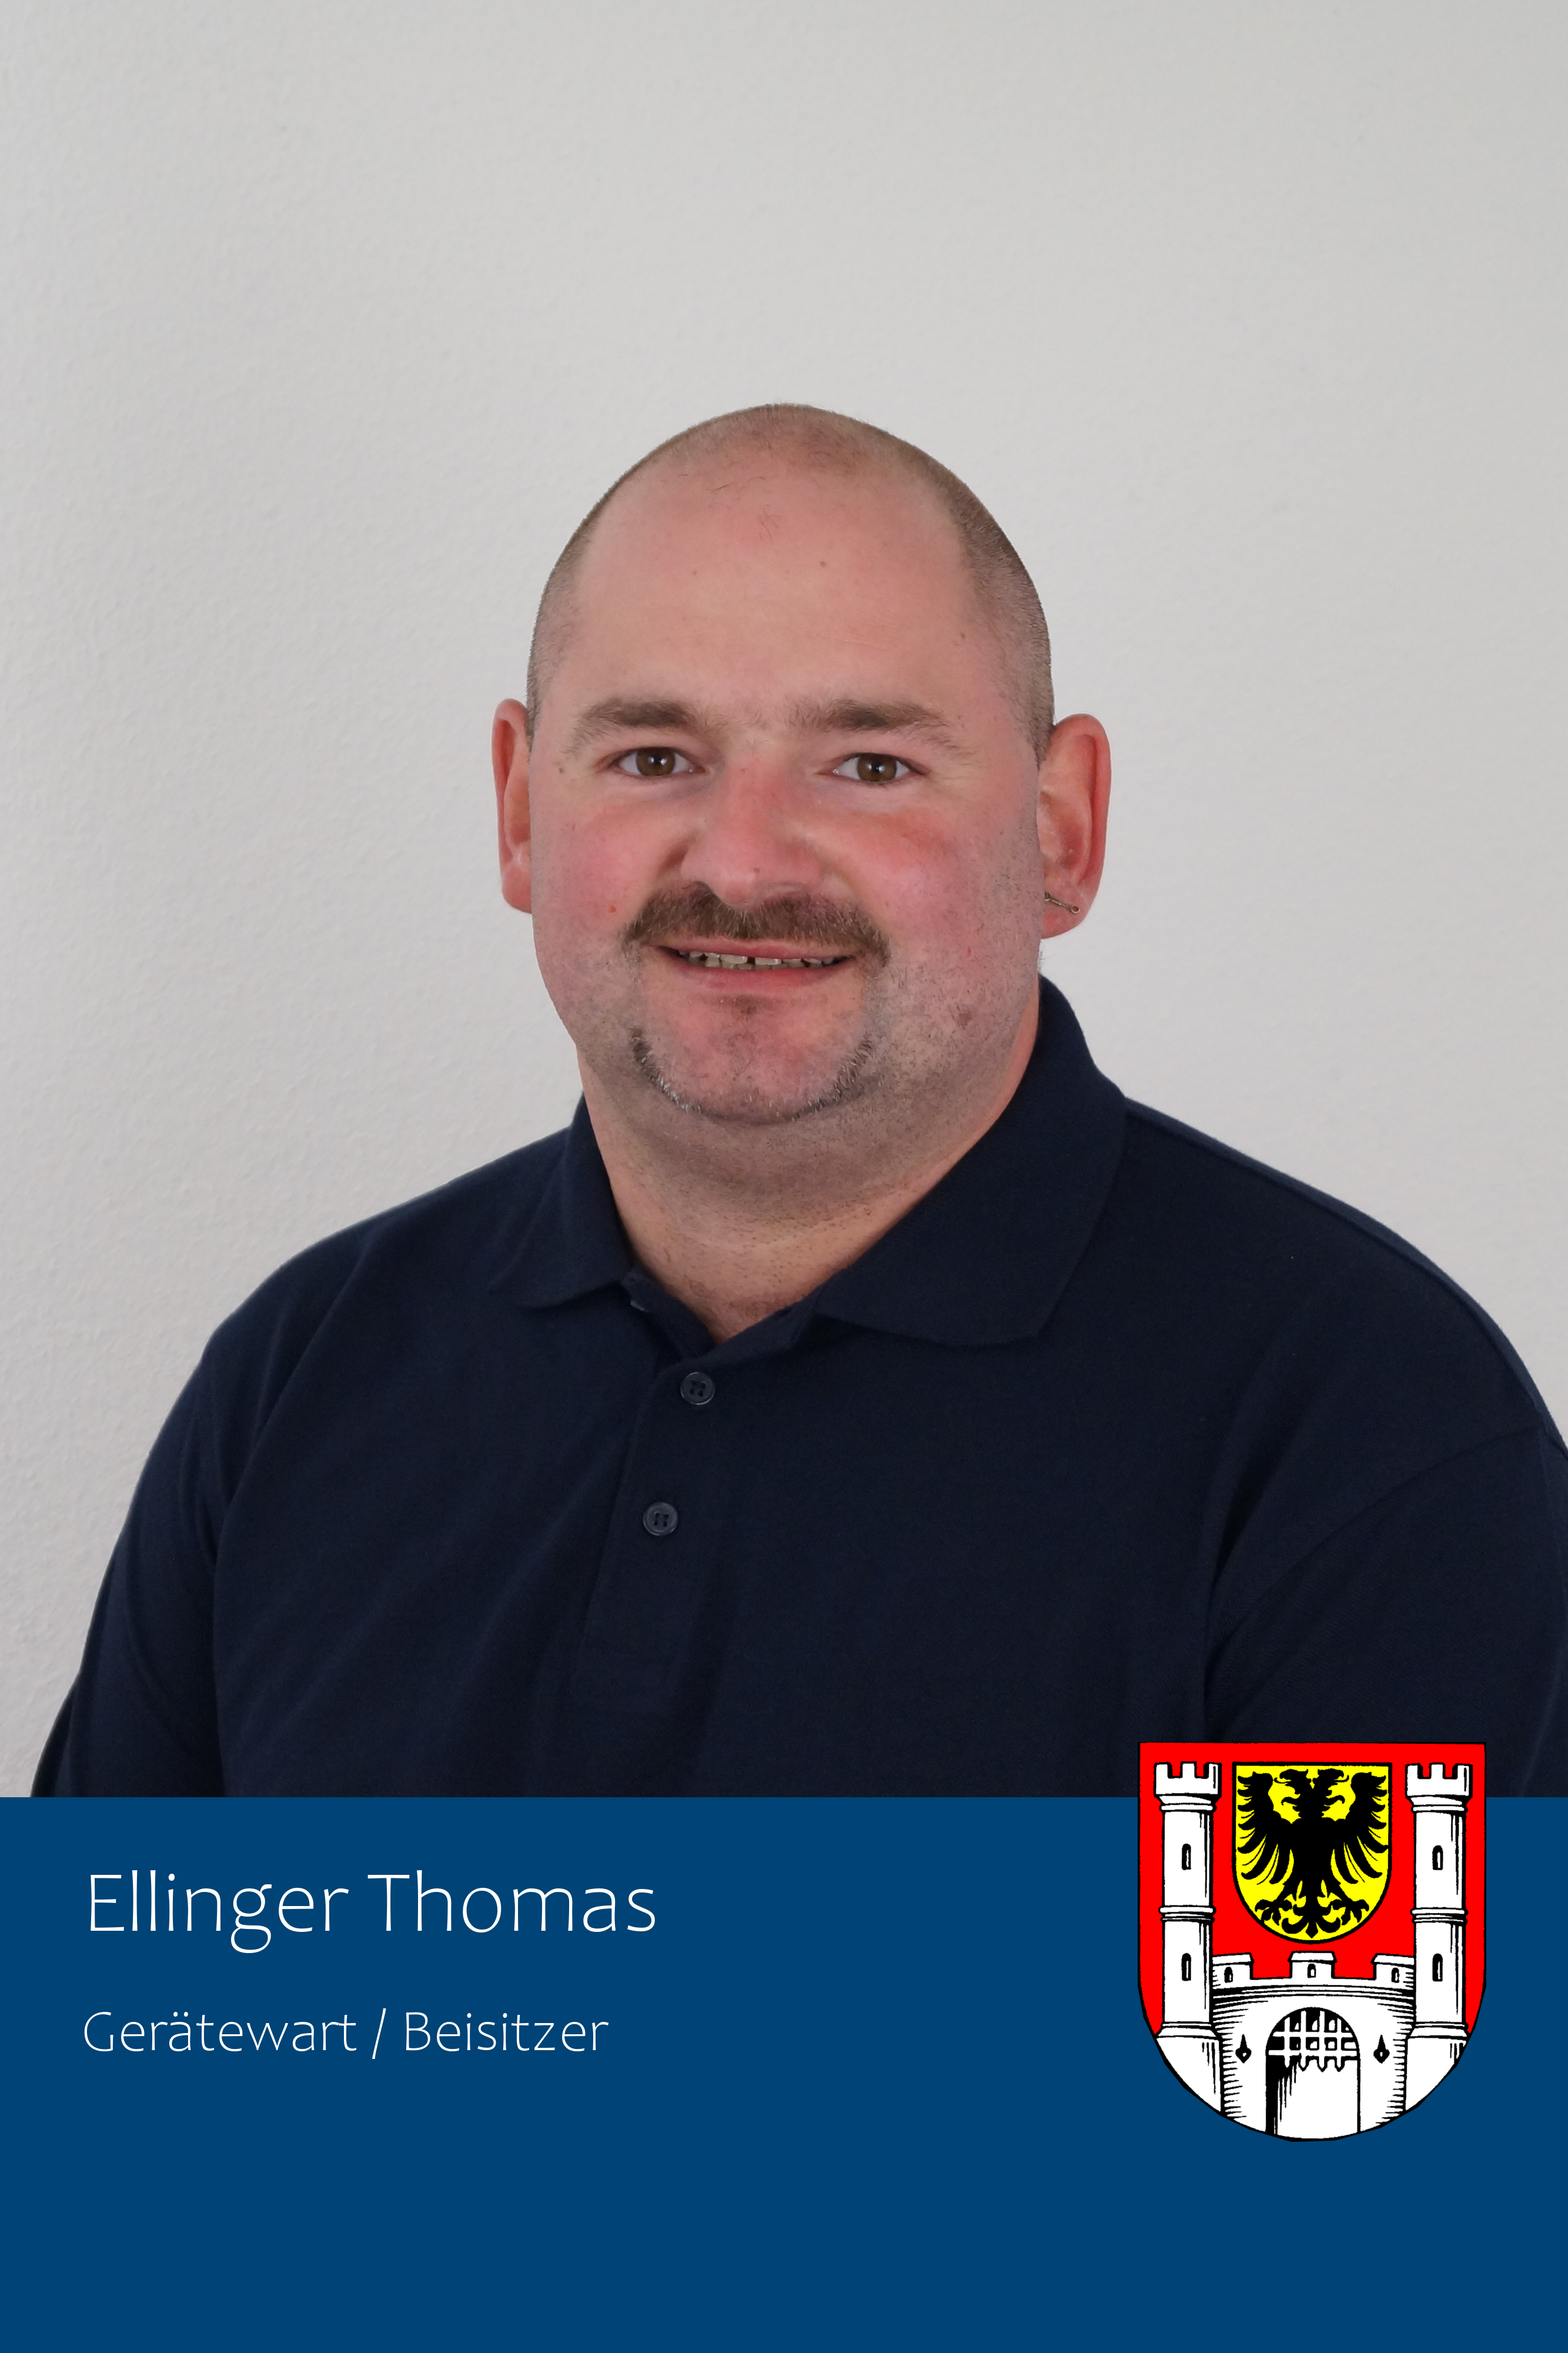 Ellinger Thomas